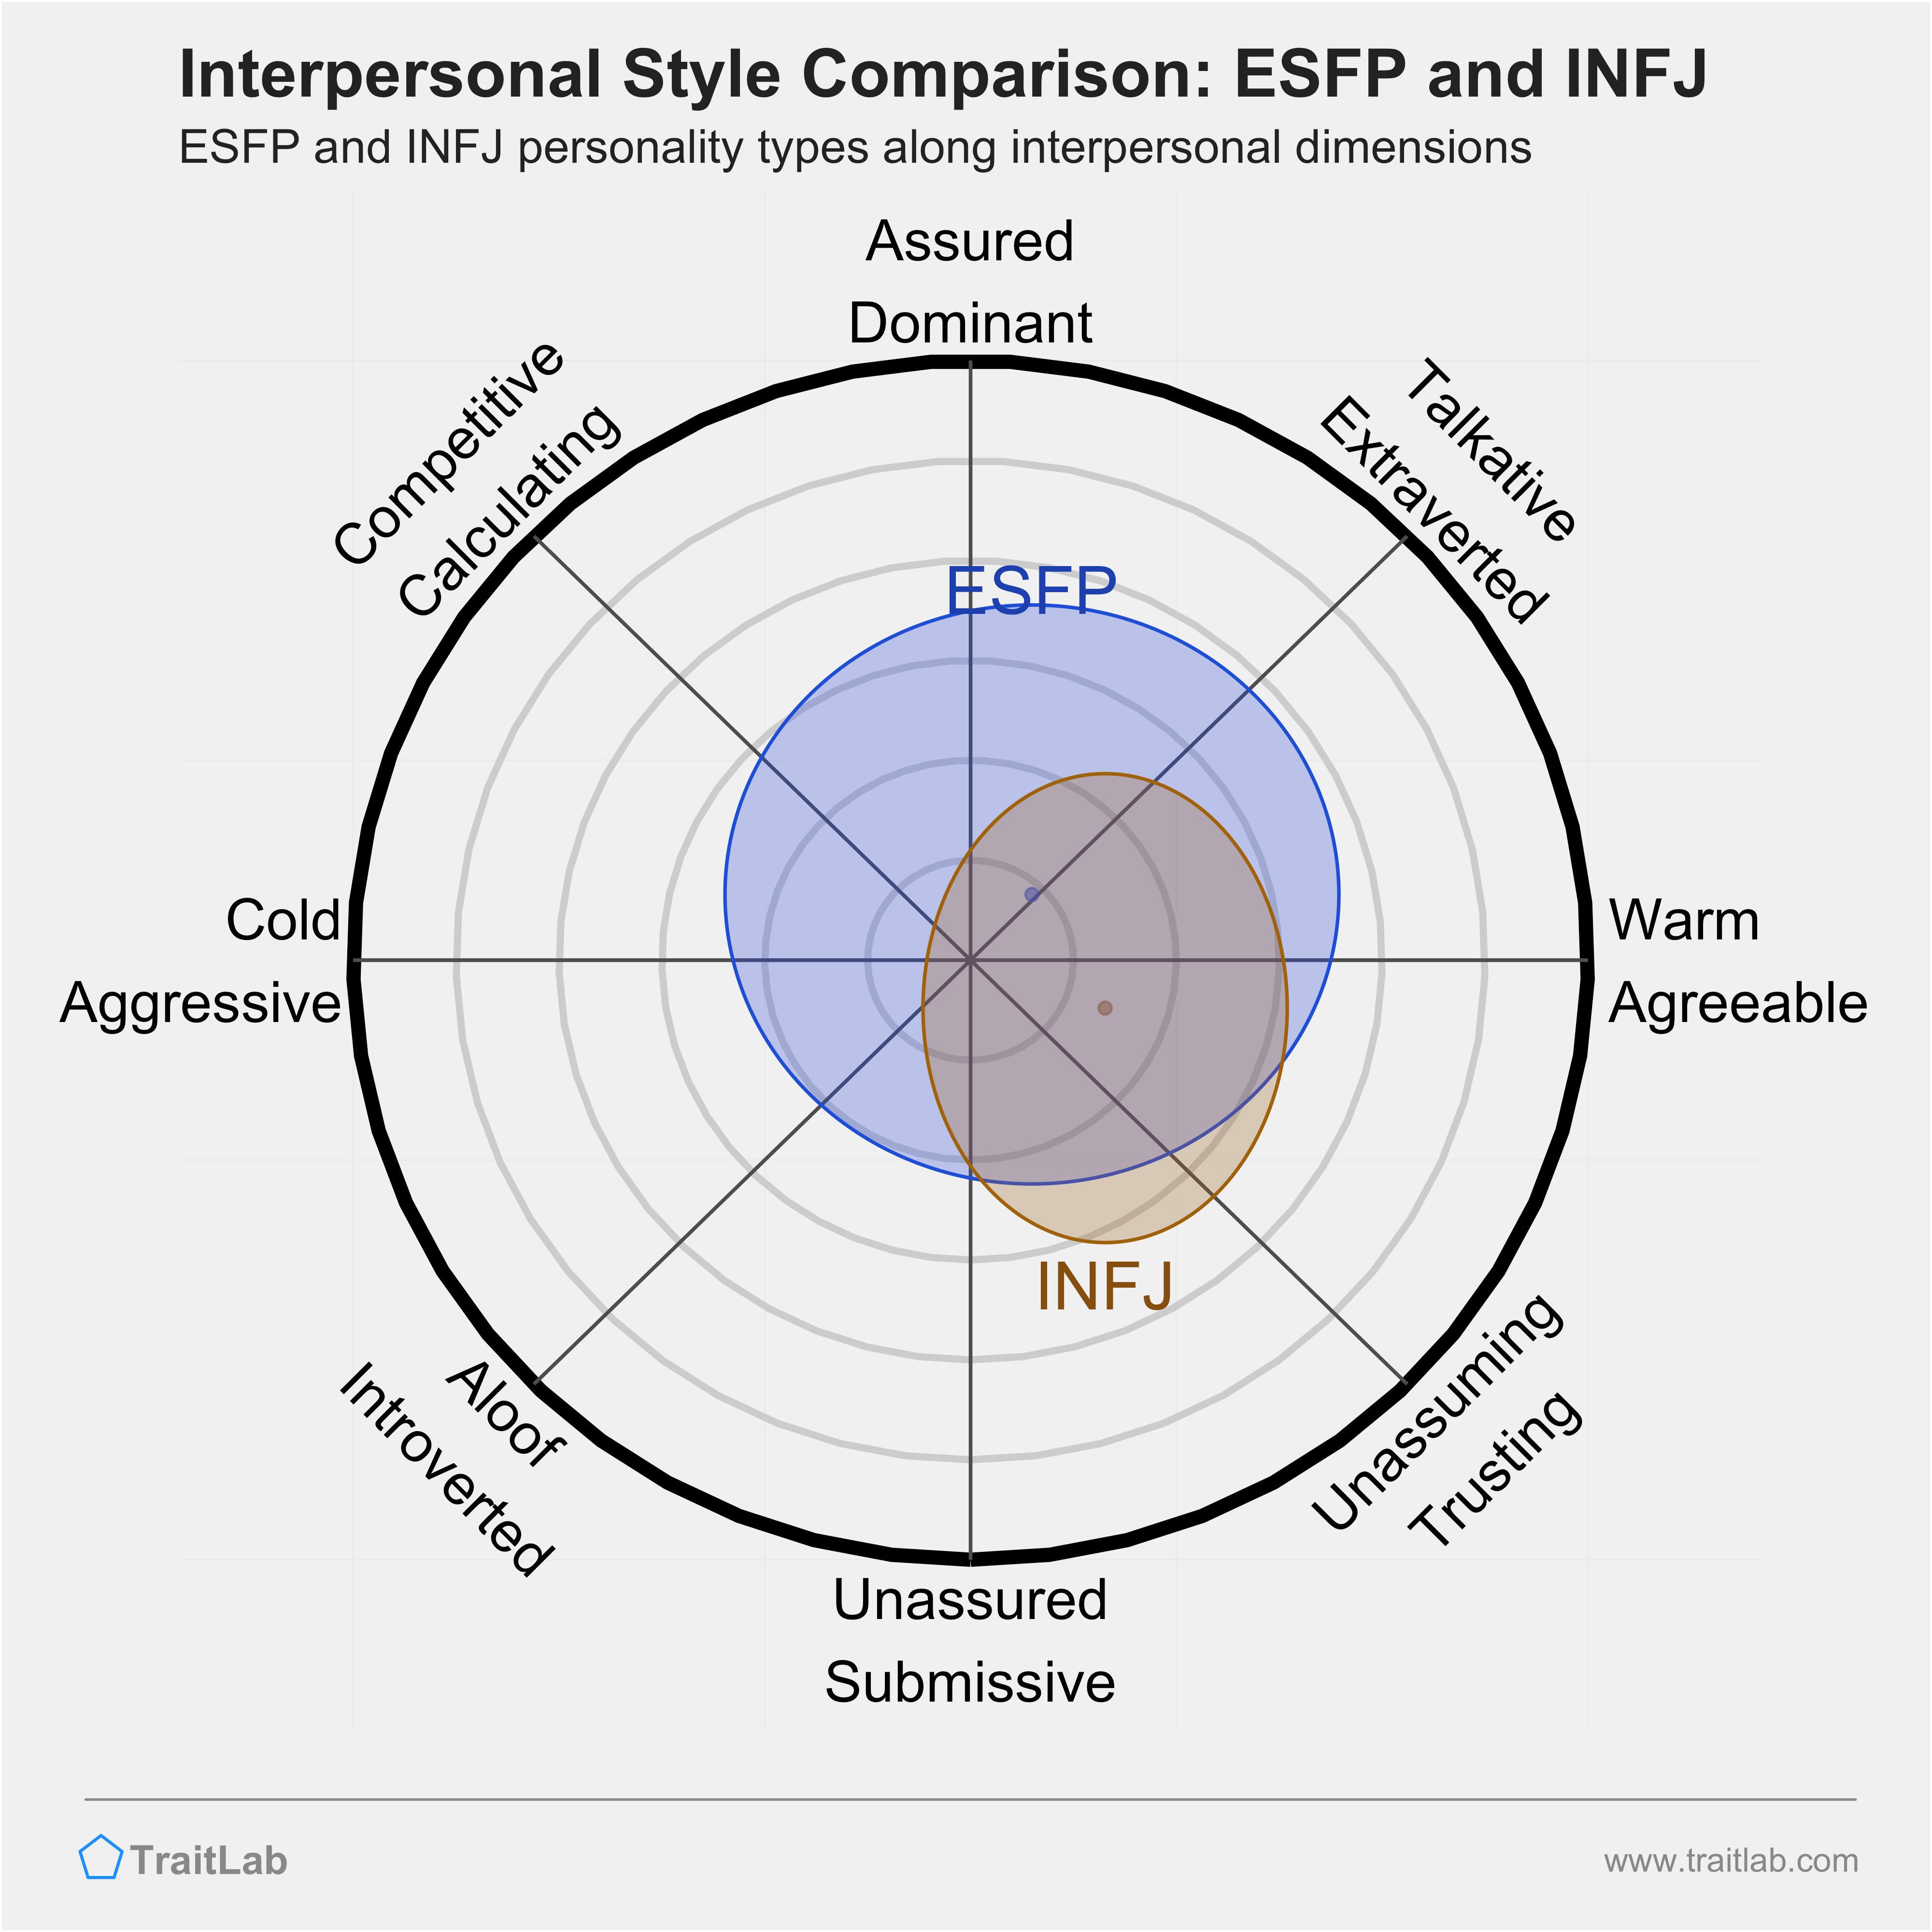 ESFP and INFJ comparison across interpersonal dimensions